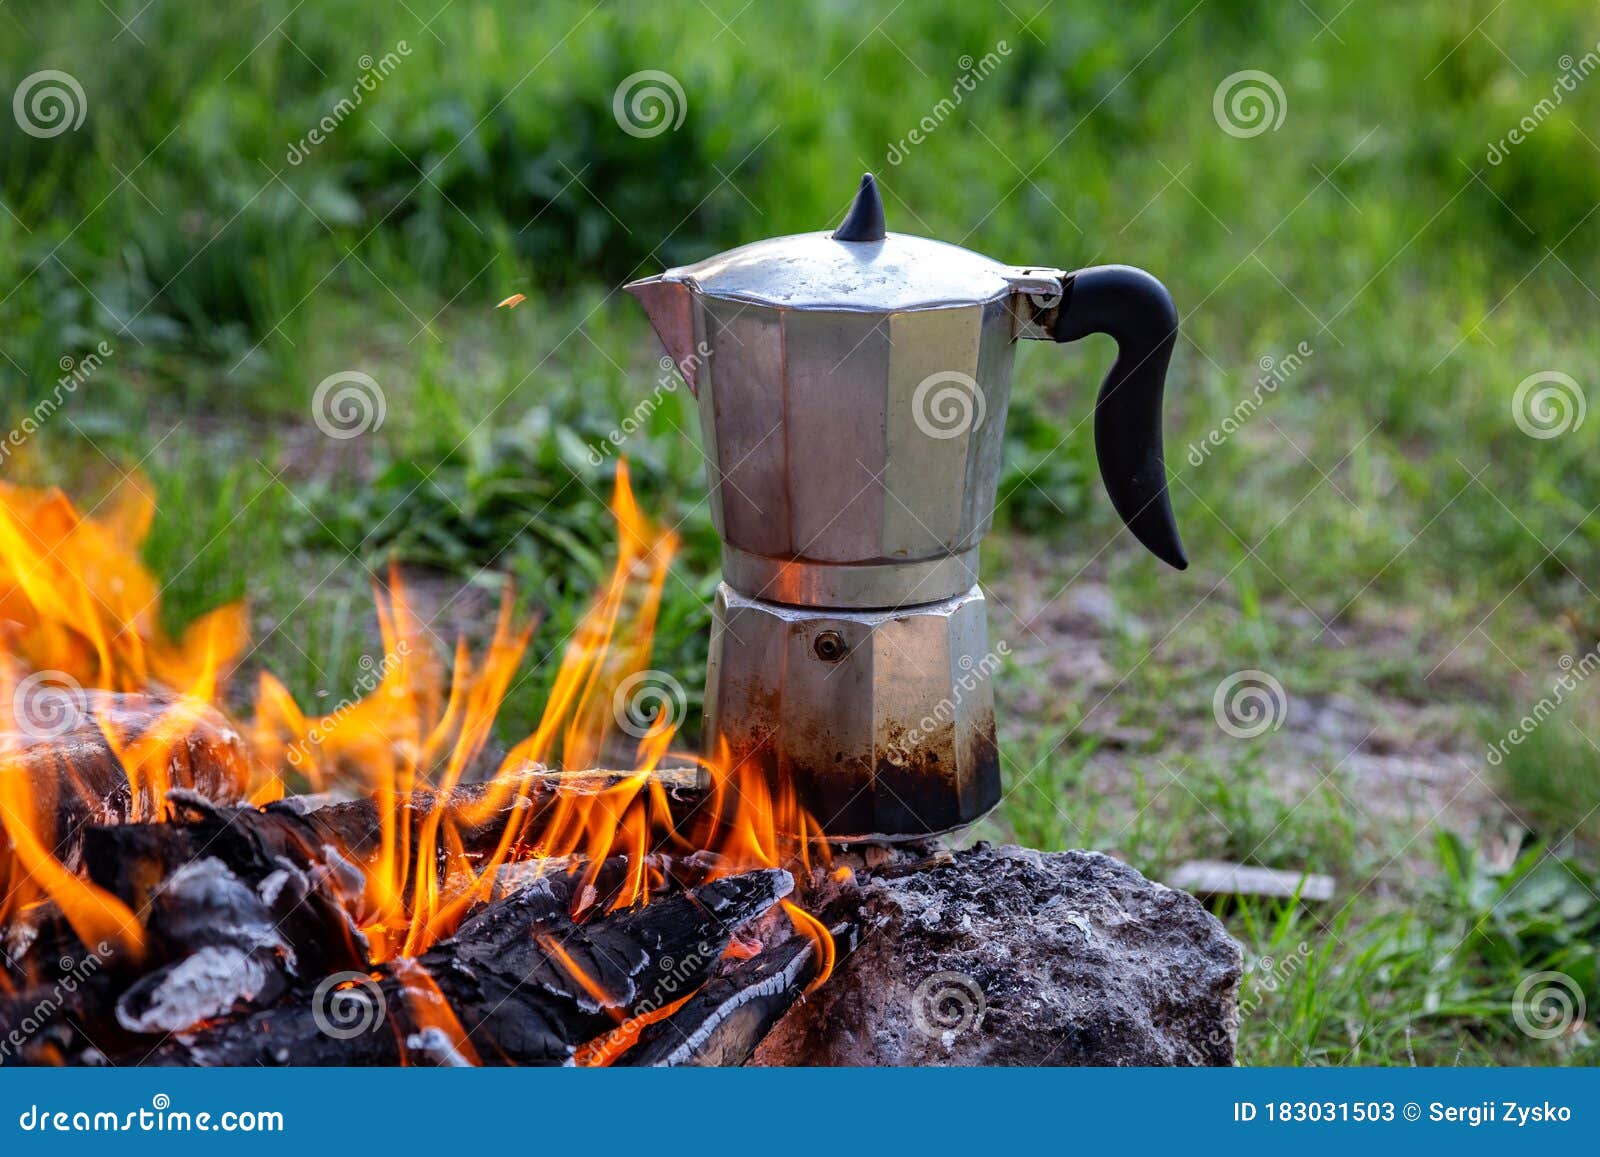 https://thumbs.dreamstime.com/z/metal-coffee-maker-open-fire-nature-making-camping-summer-183031503.jpg